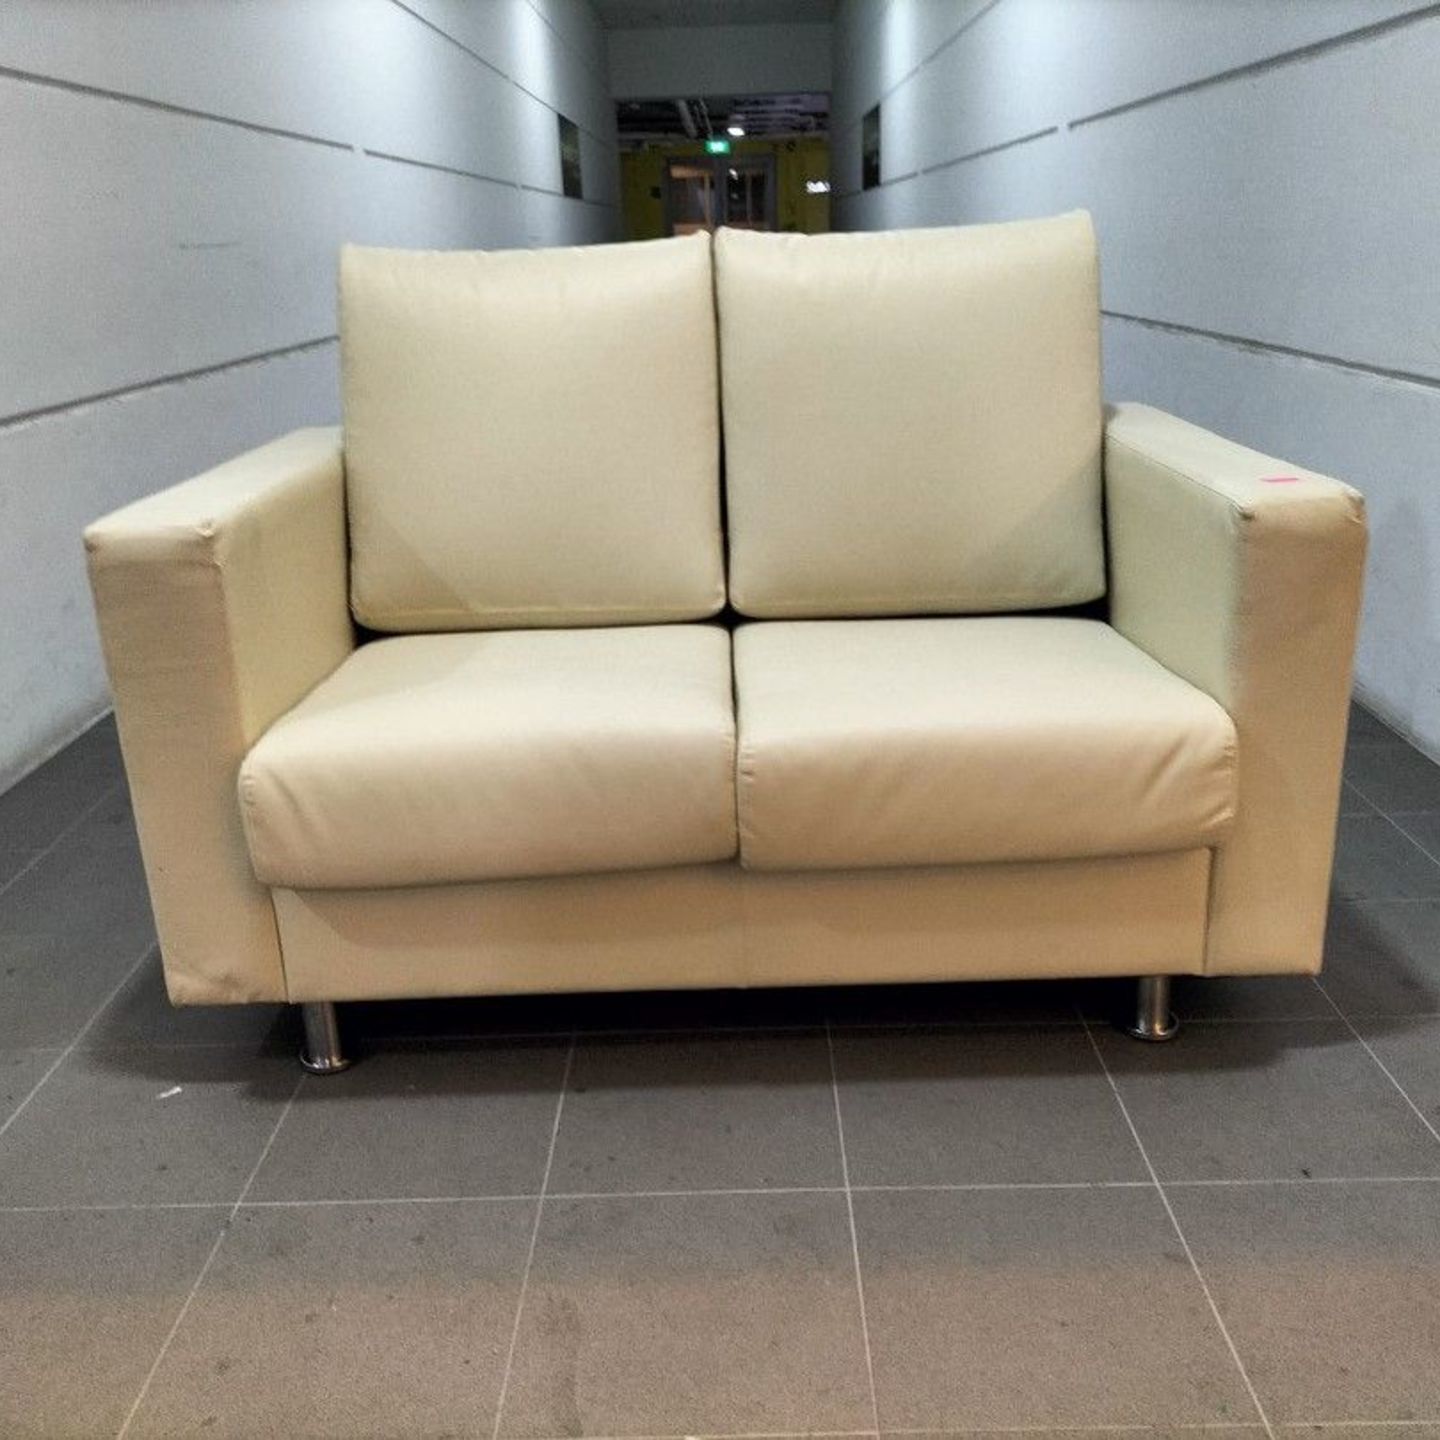 AGUSTA II 2 Seater Sofa in LIGHT BEIGE Faux Leather